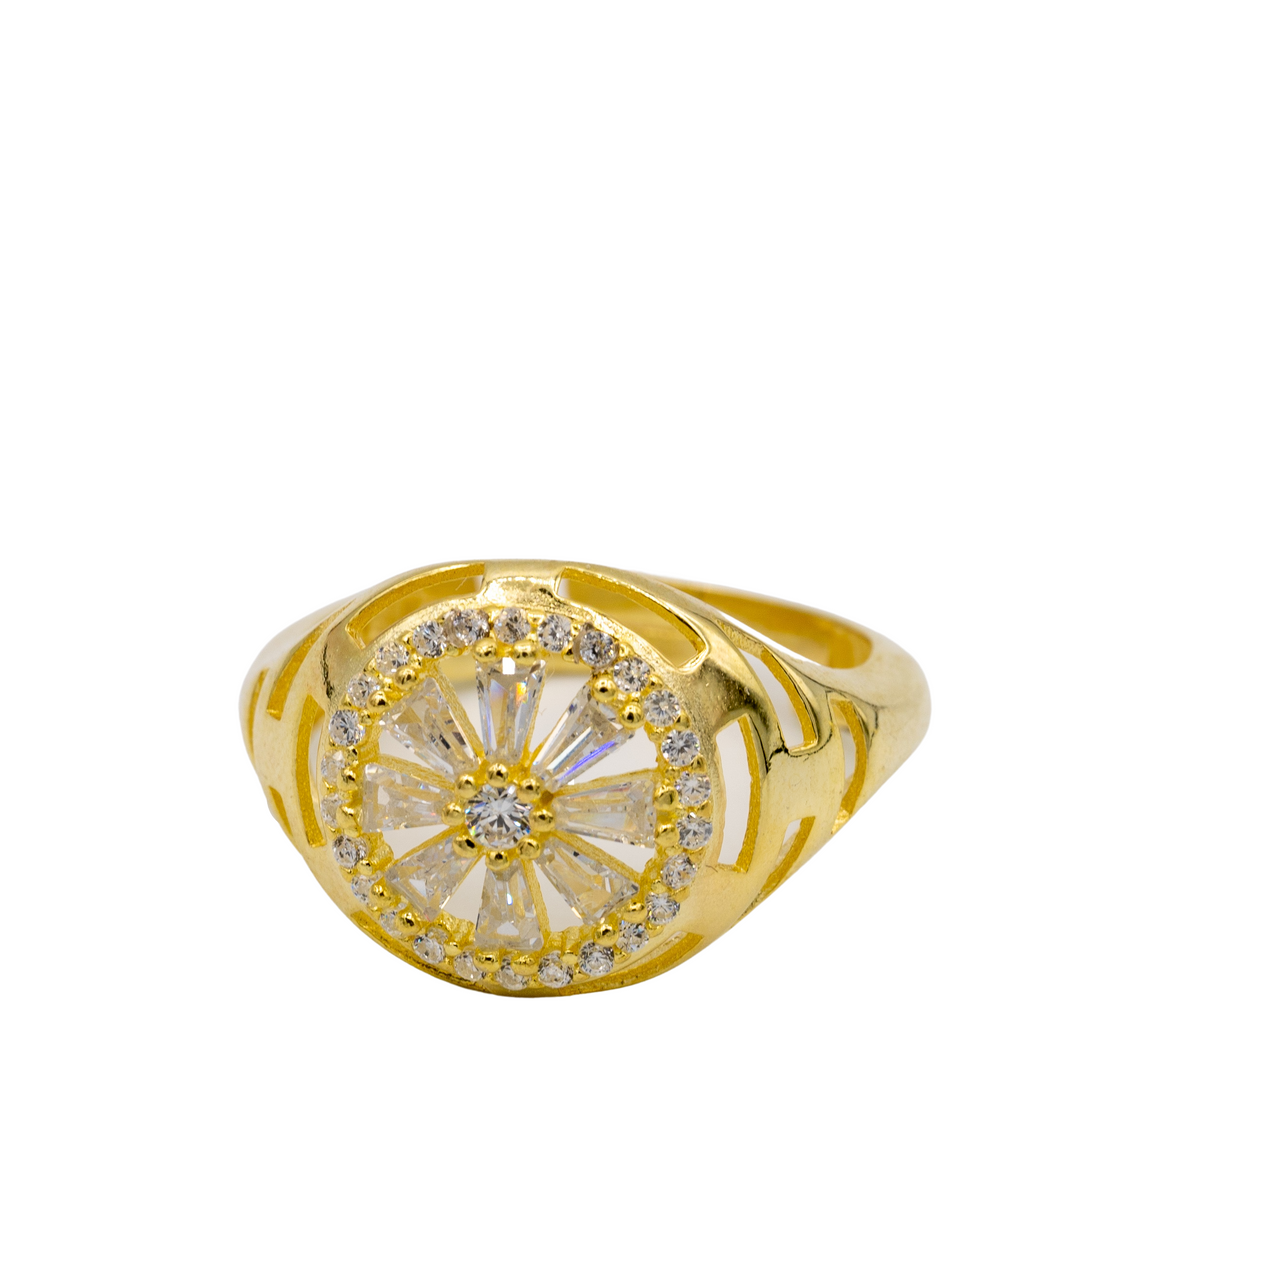 The Gold Flower Ring